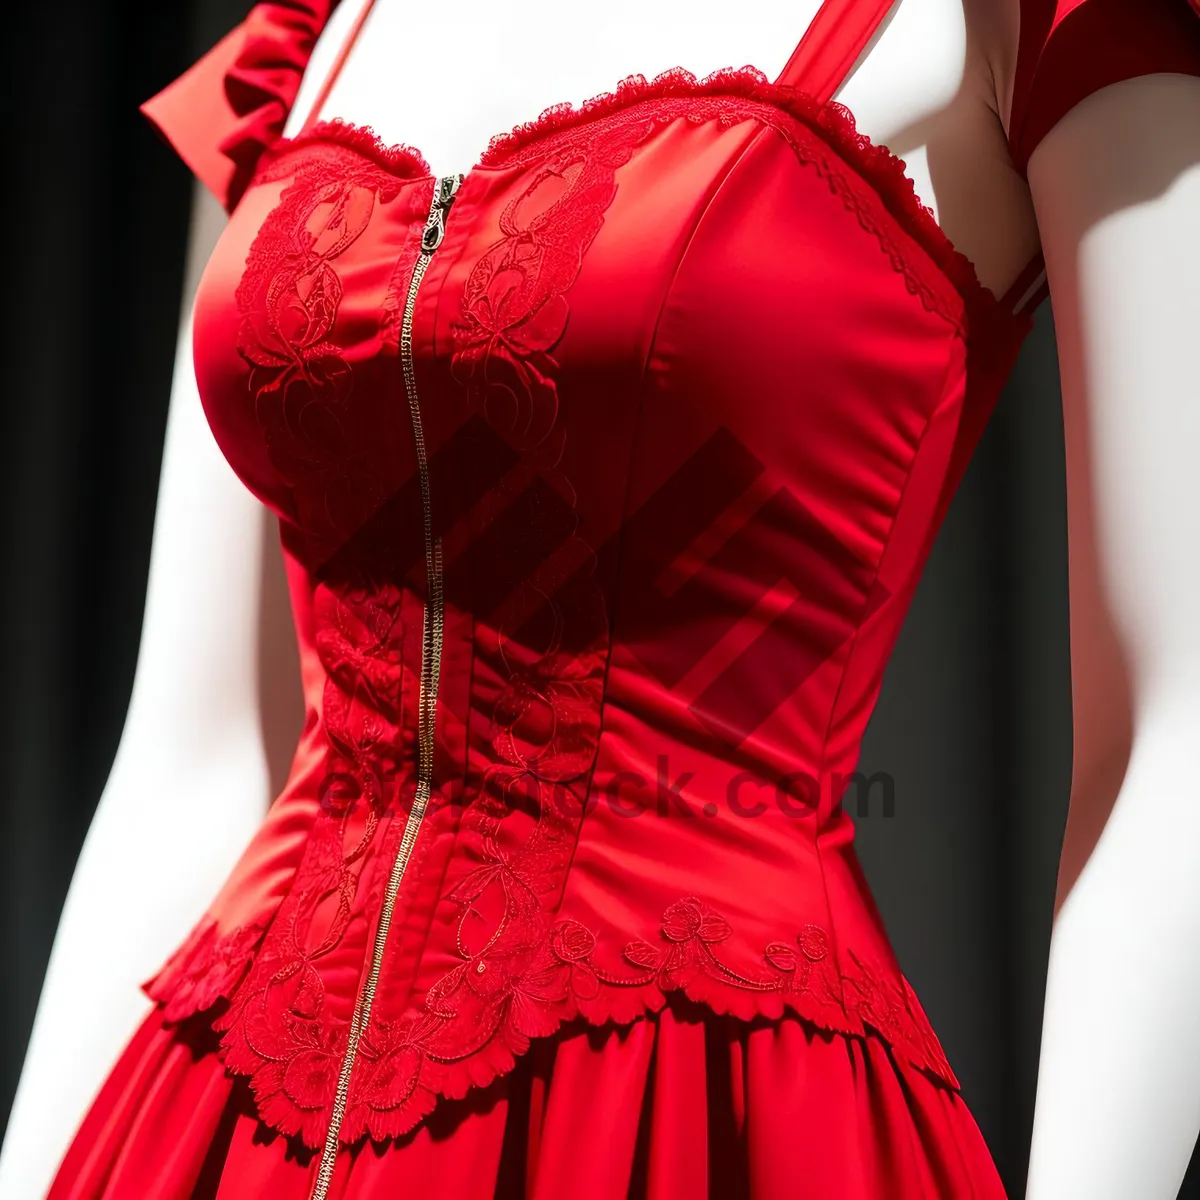 Picture of Seductive fashion model in alluring lingerie